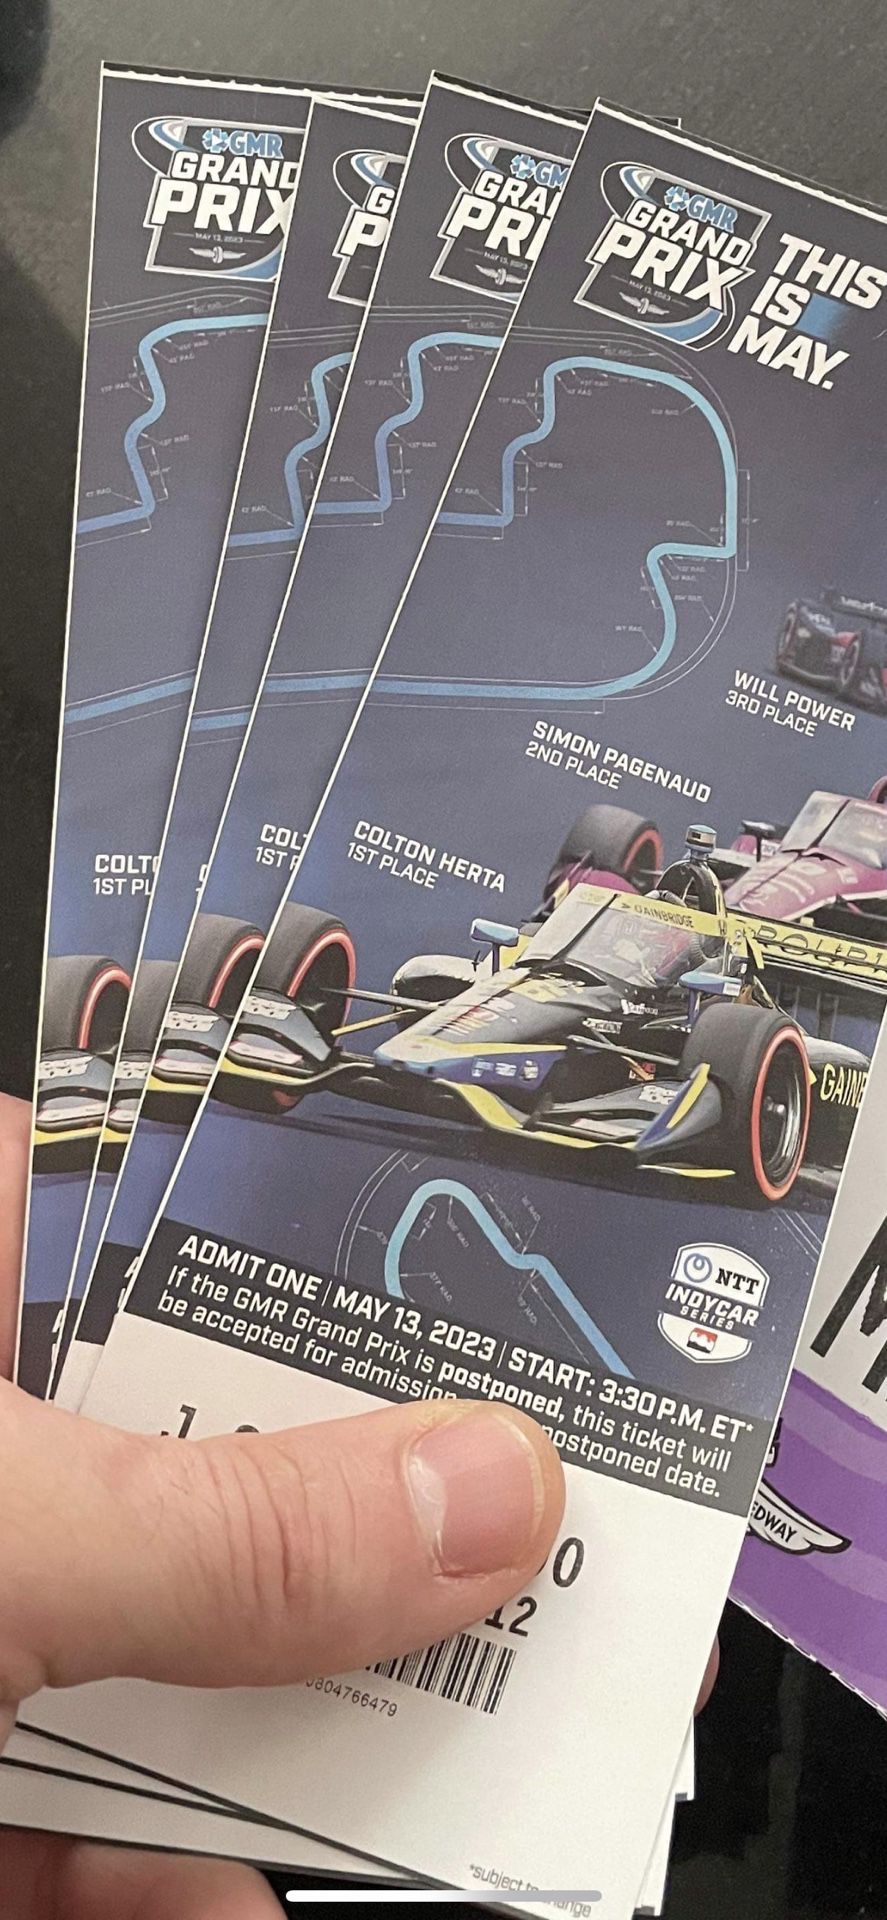 Grand Prix Indianapolis May 13 4 Tickets 